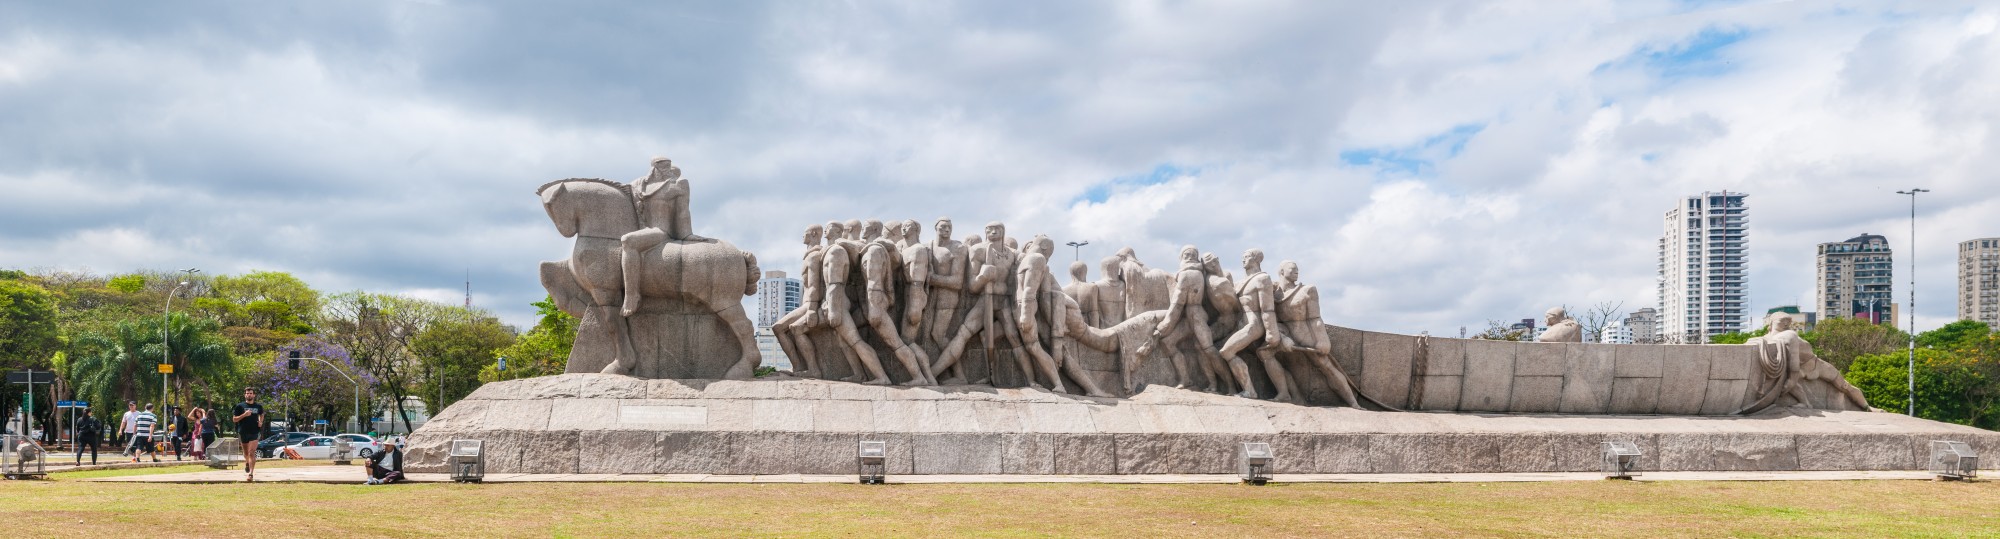 Monumento a las Banderas, São Paulo, Brasil